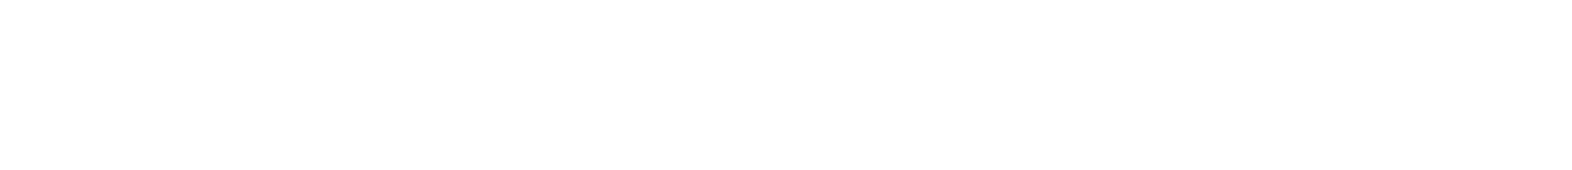 SD BioSensor logo grand pour les fonds sombres (PNG transparent)